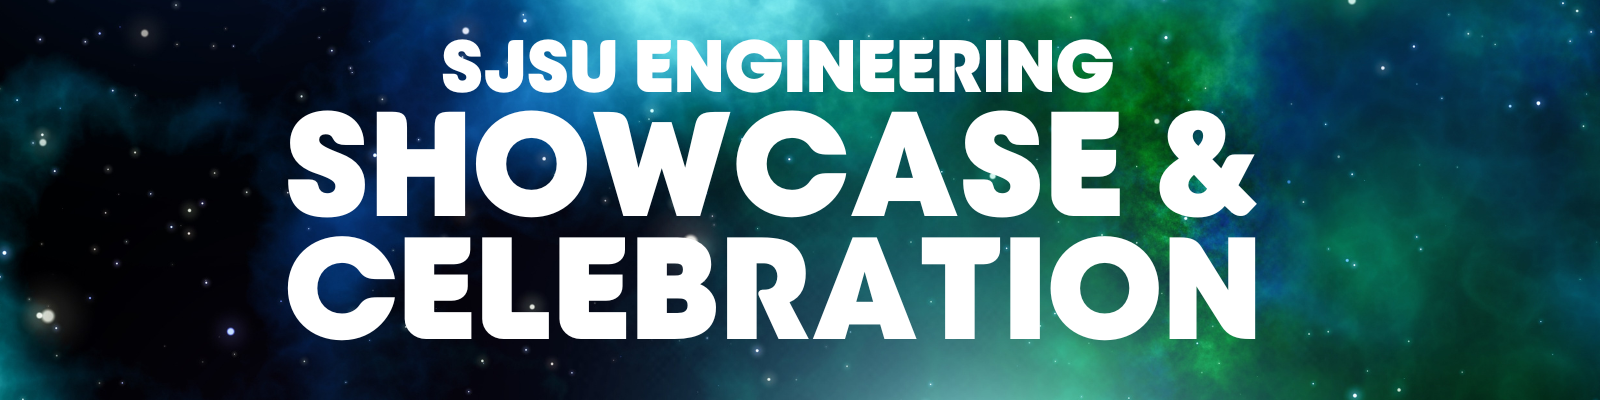 SJSU Engineering Showcase & Celebration 